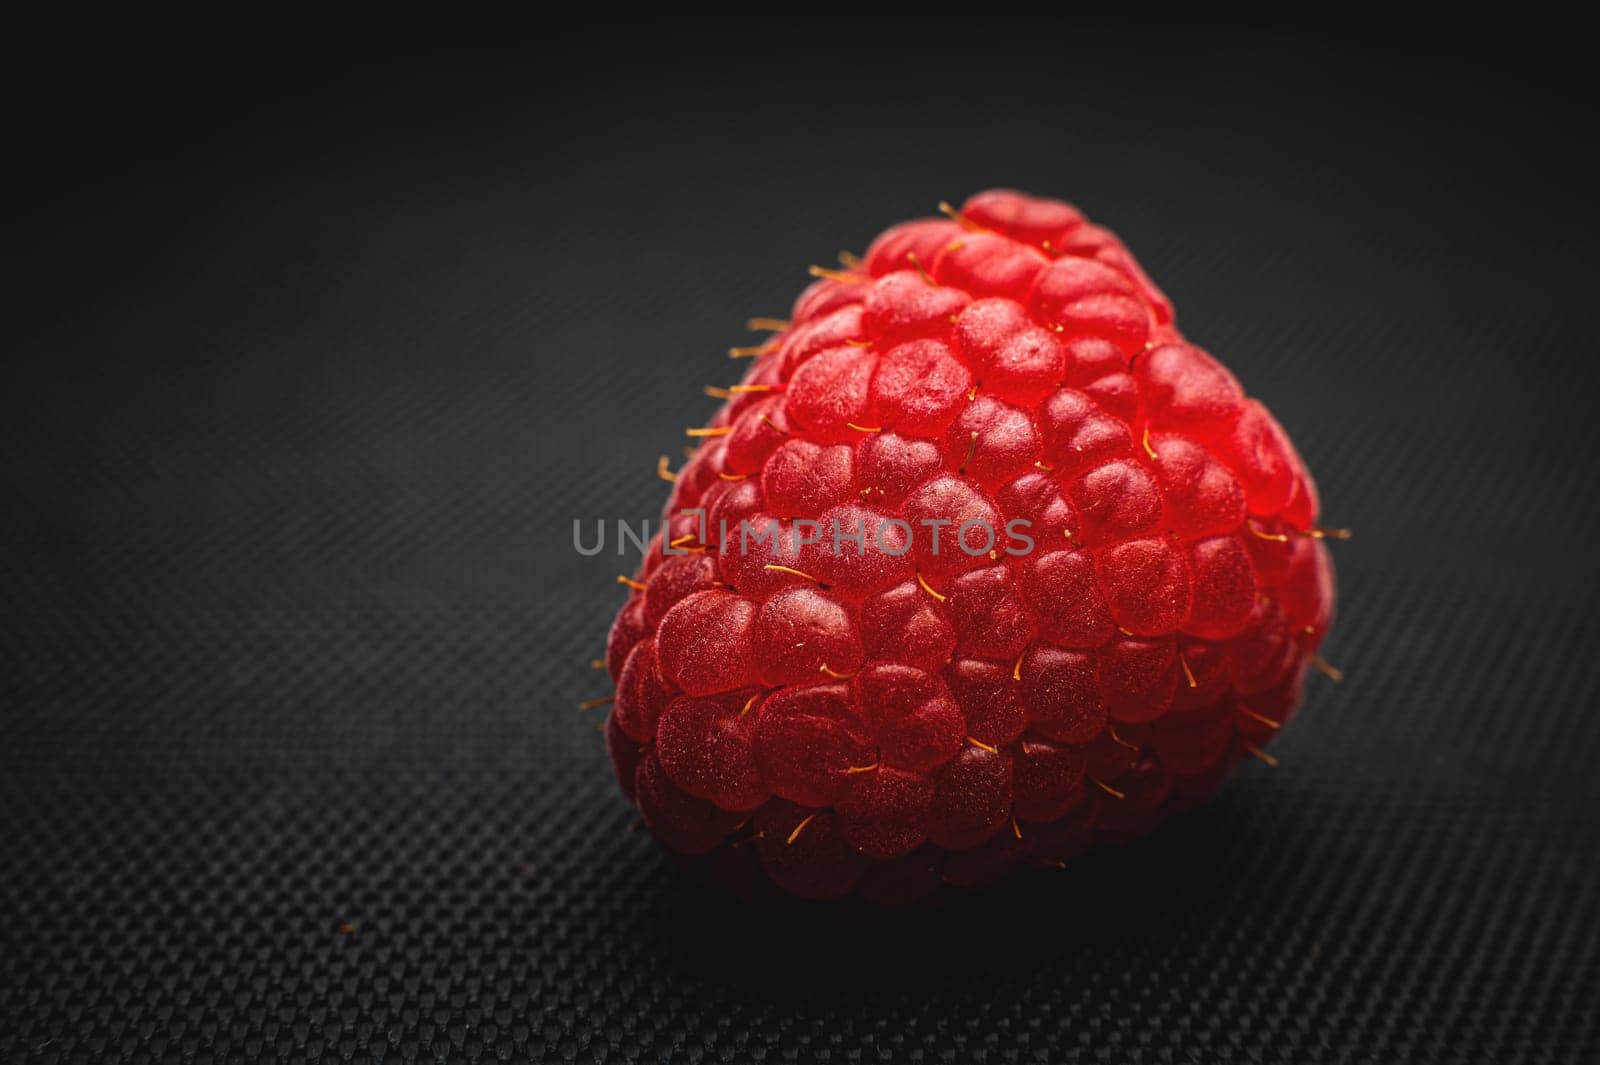 One red raspberry on a black background macro shot.